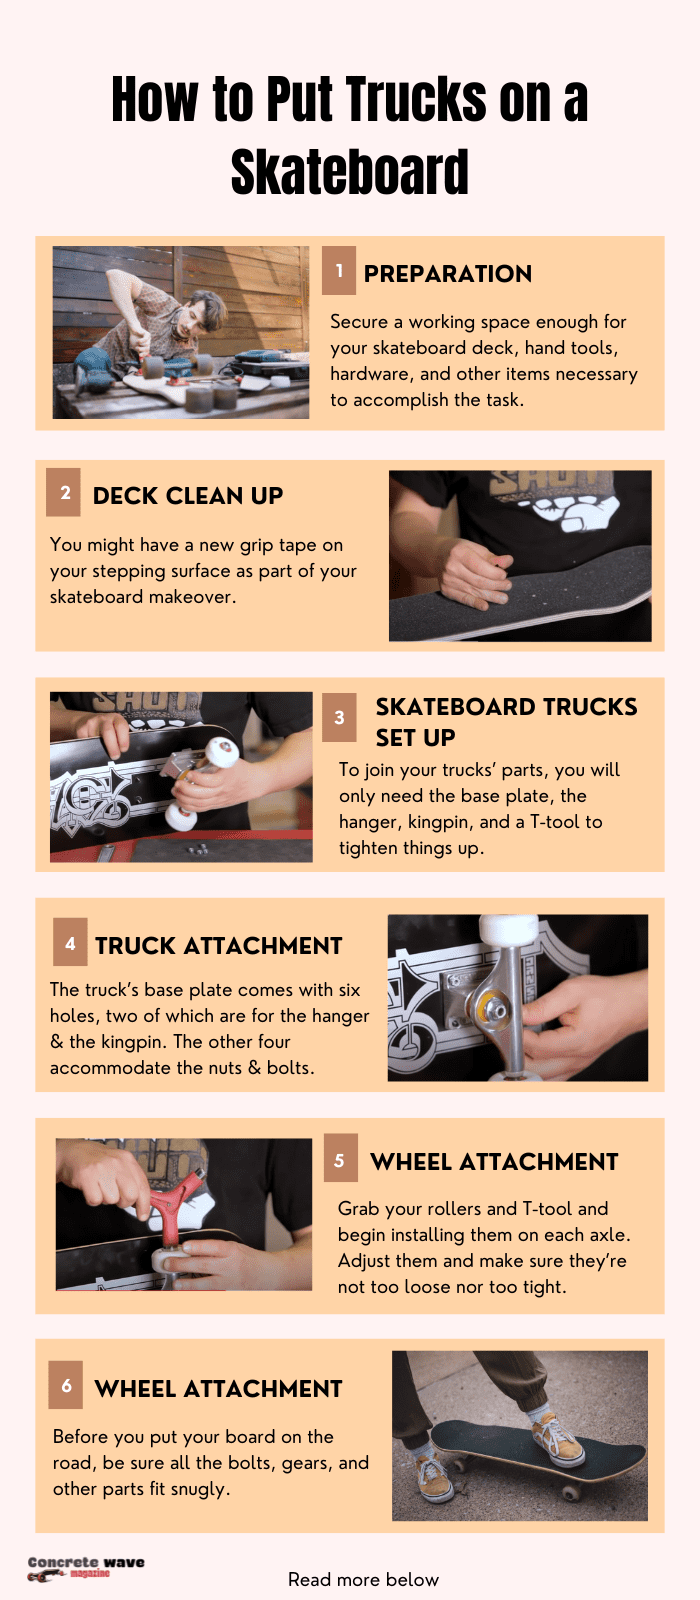 assemble-trucks-on-a-skateboard